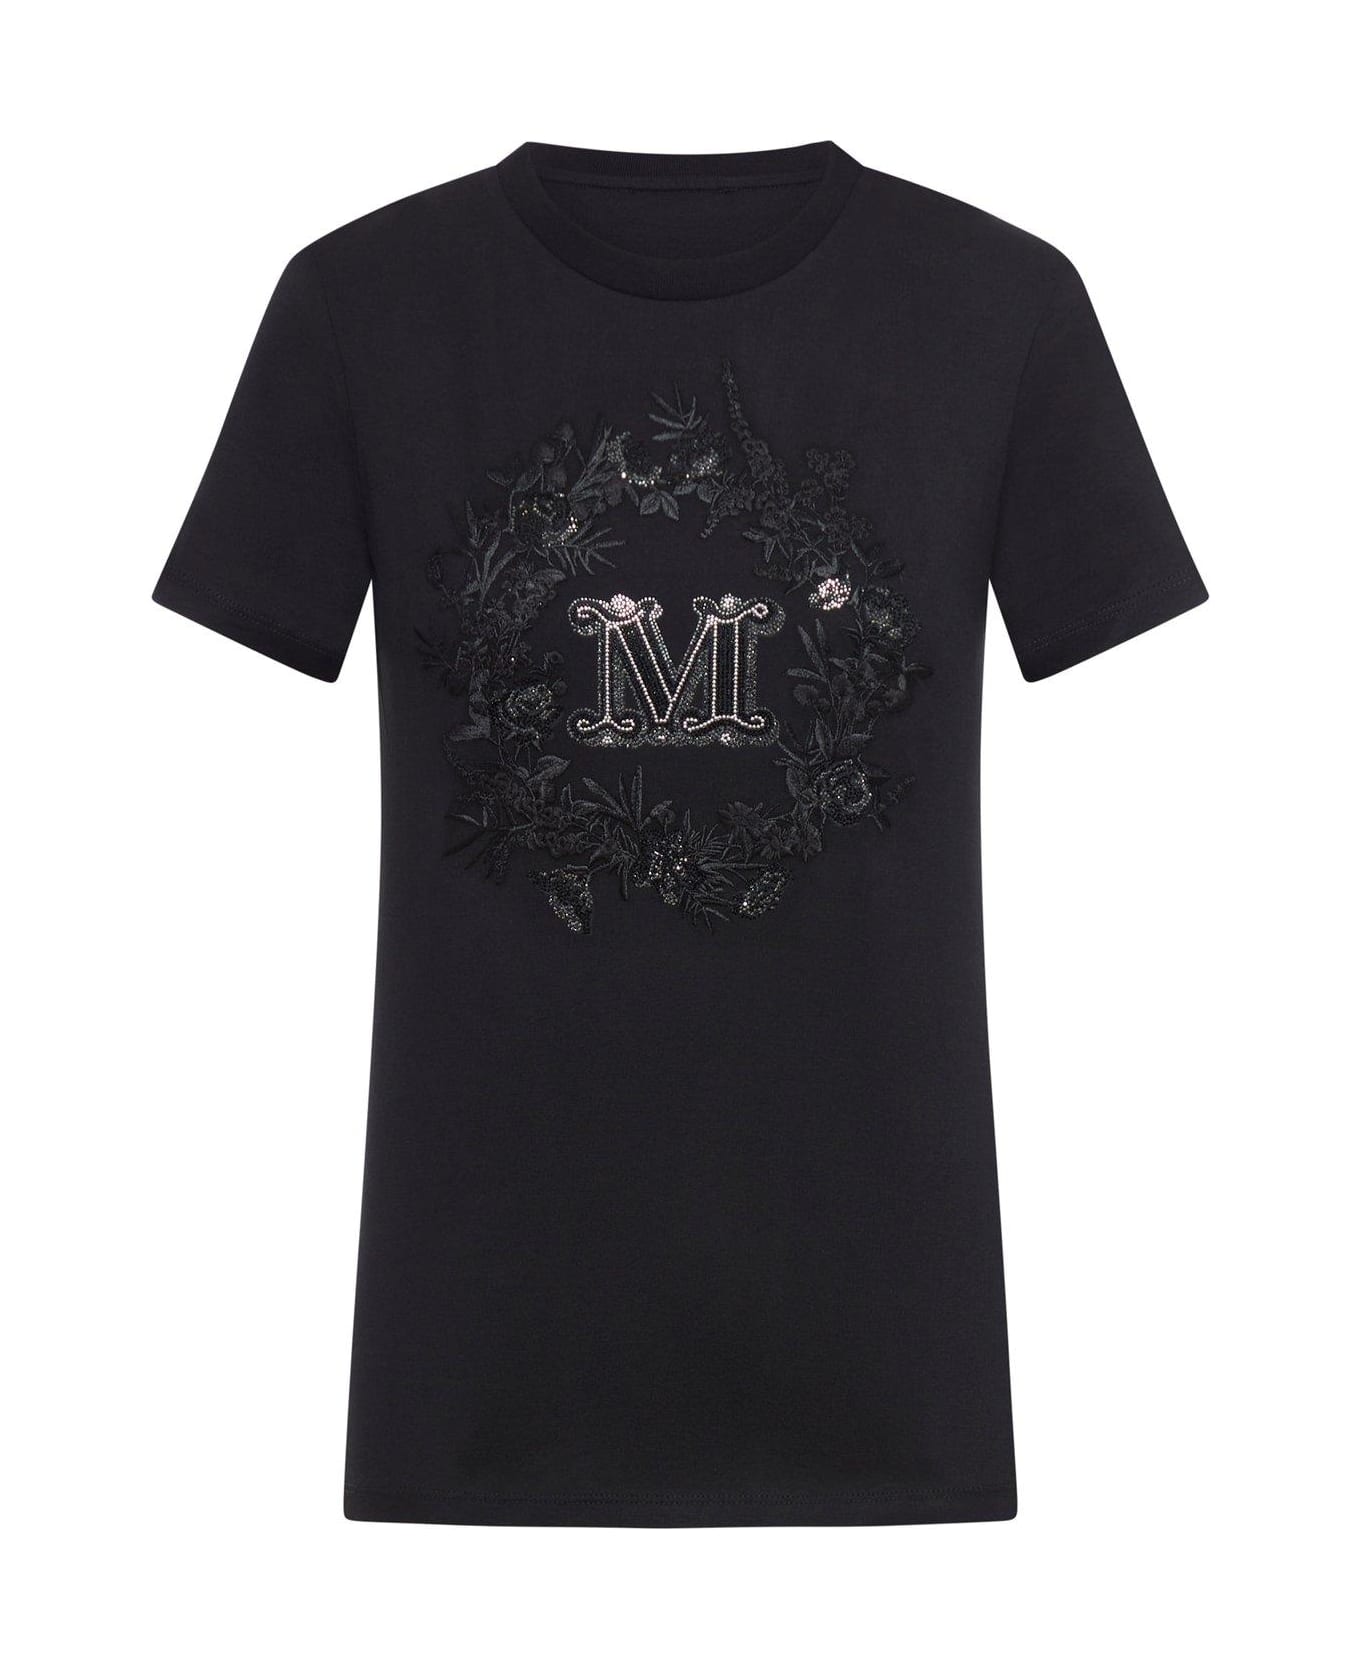 Max Mara Elmo Cotton Crew-neck T-shirt - Black Tシャツ